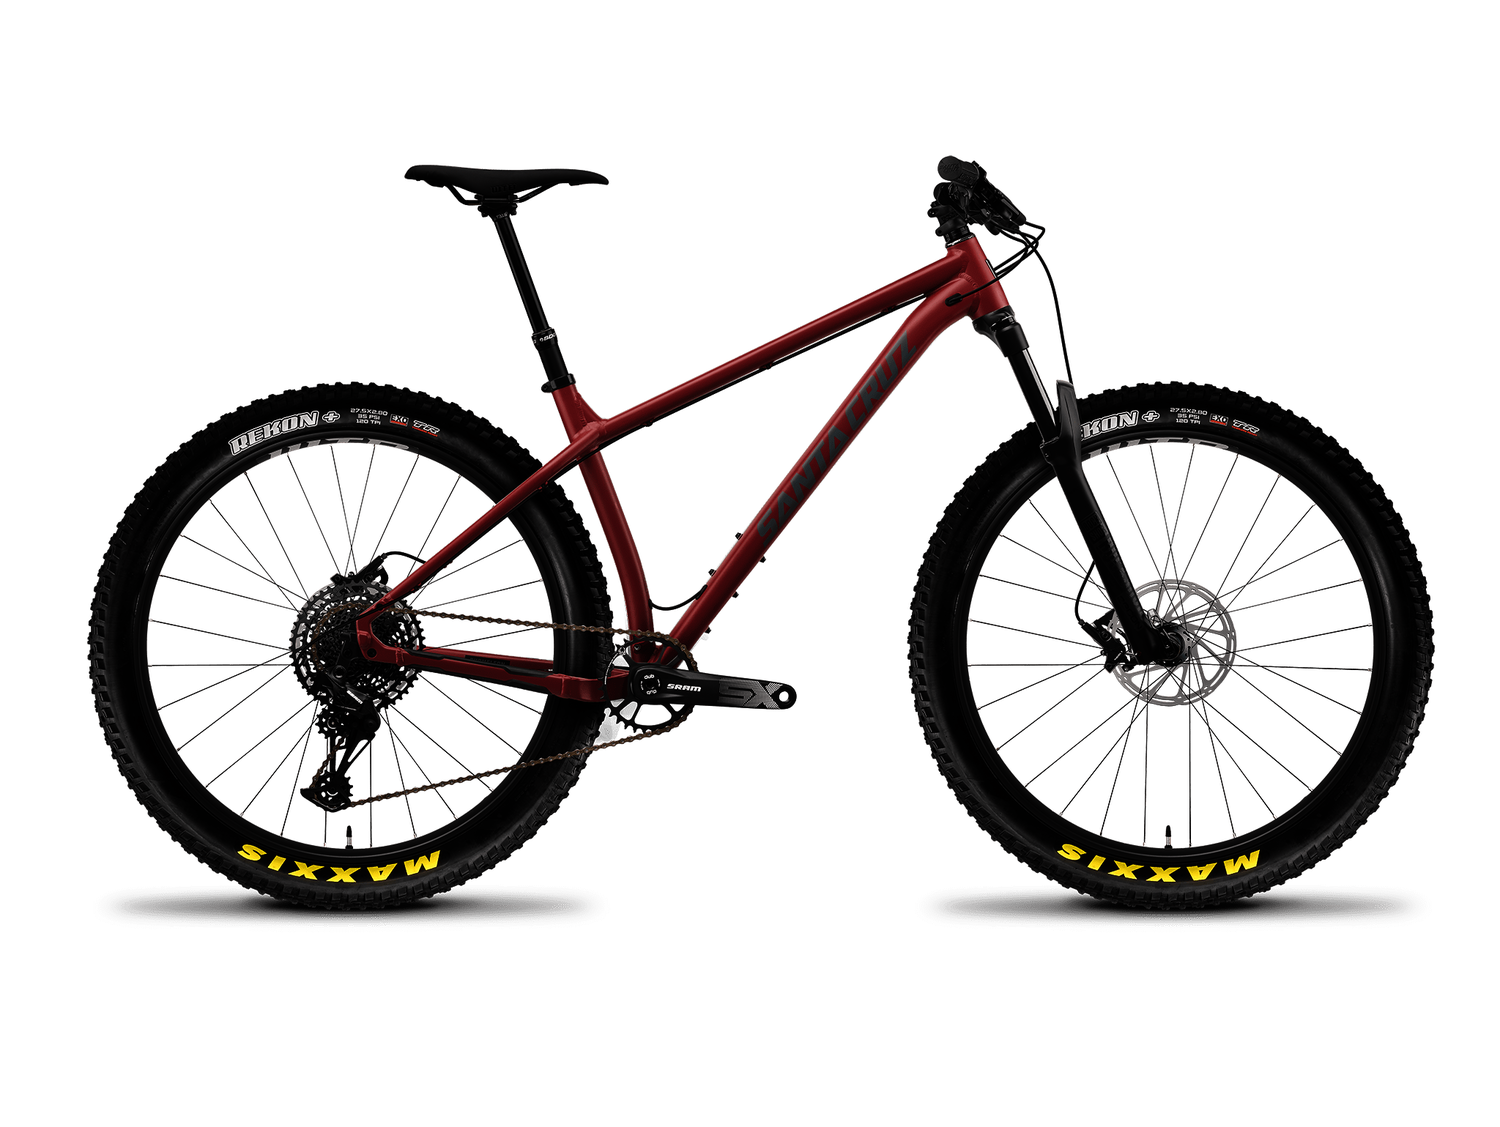 gravel bike vs xc hardtail